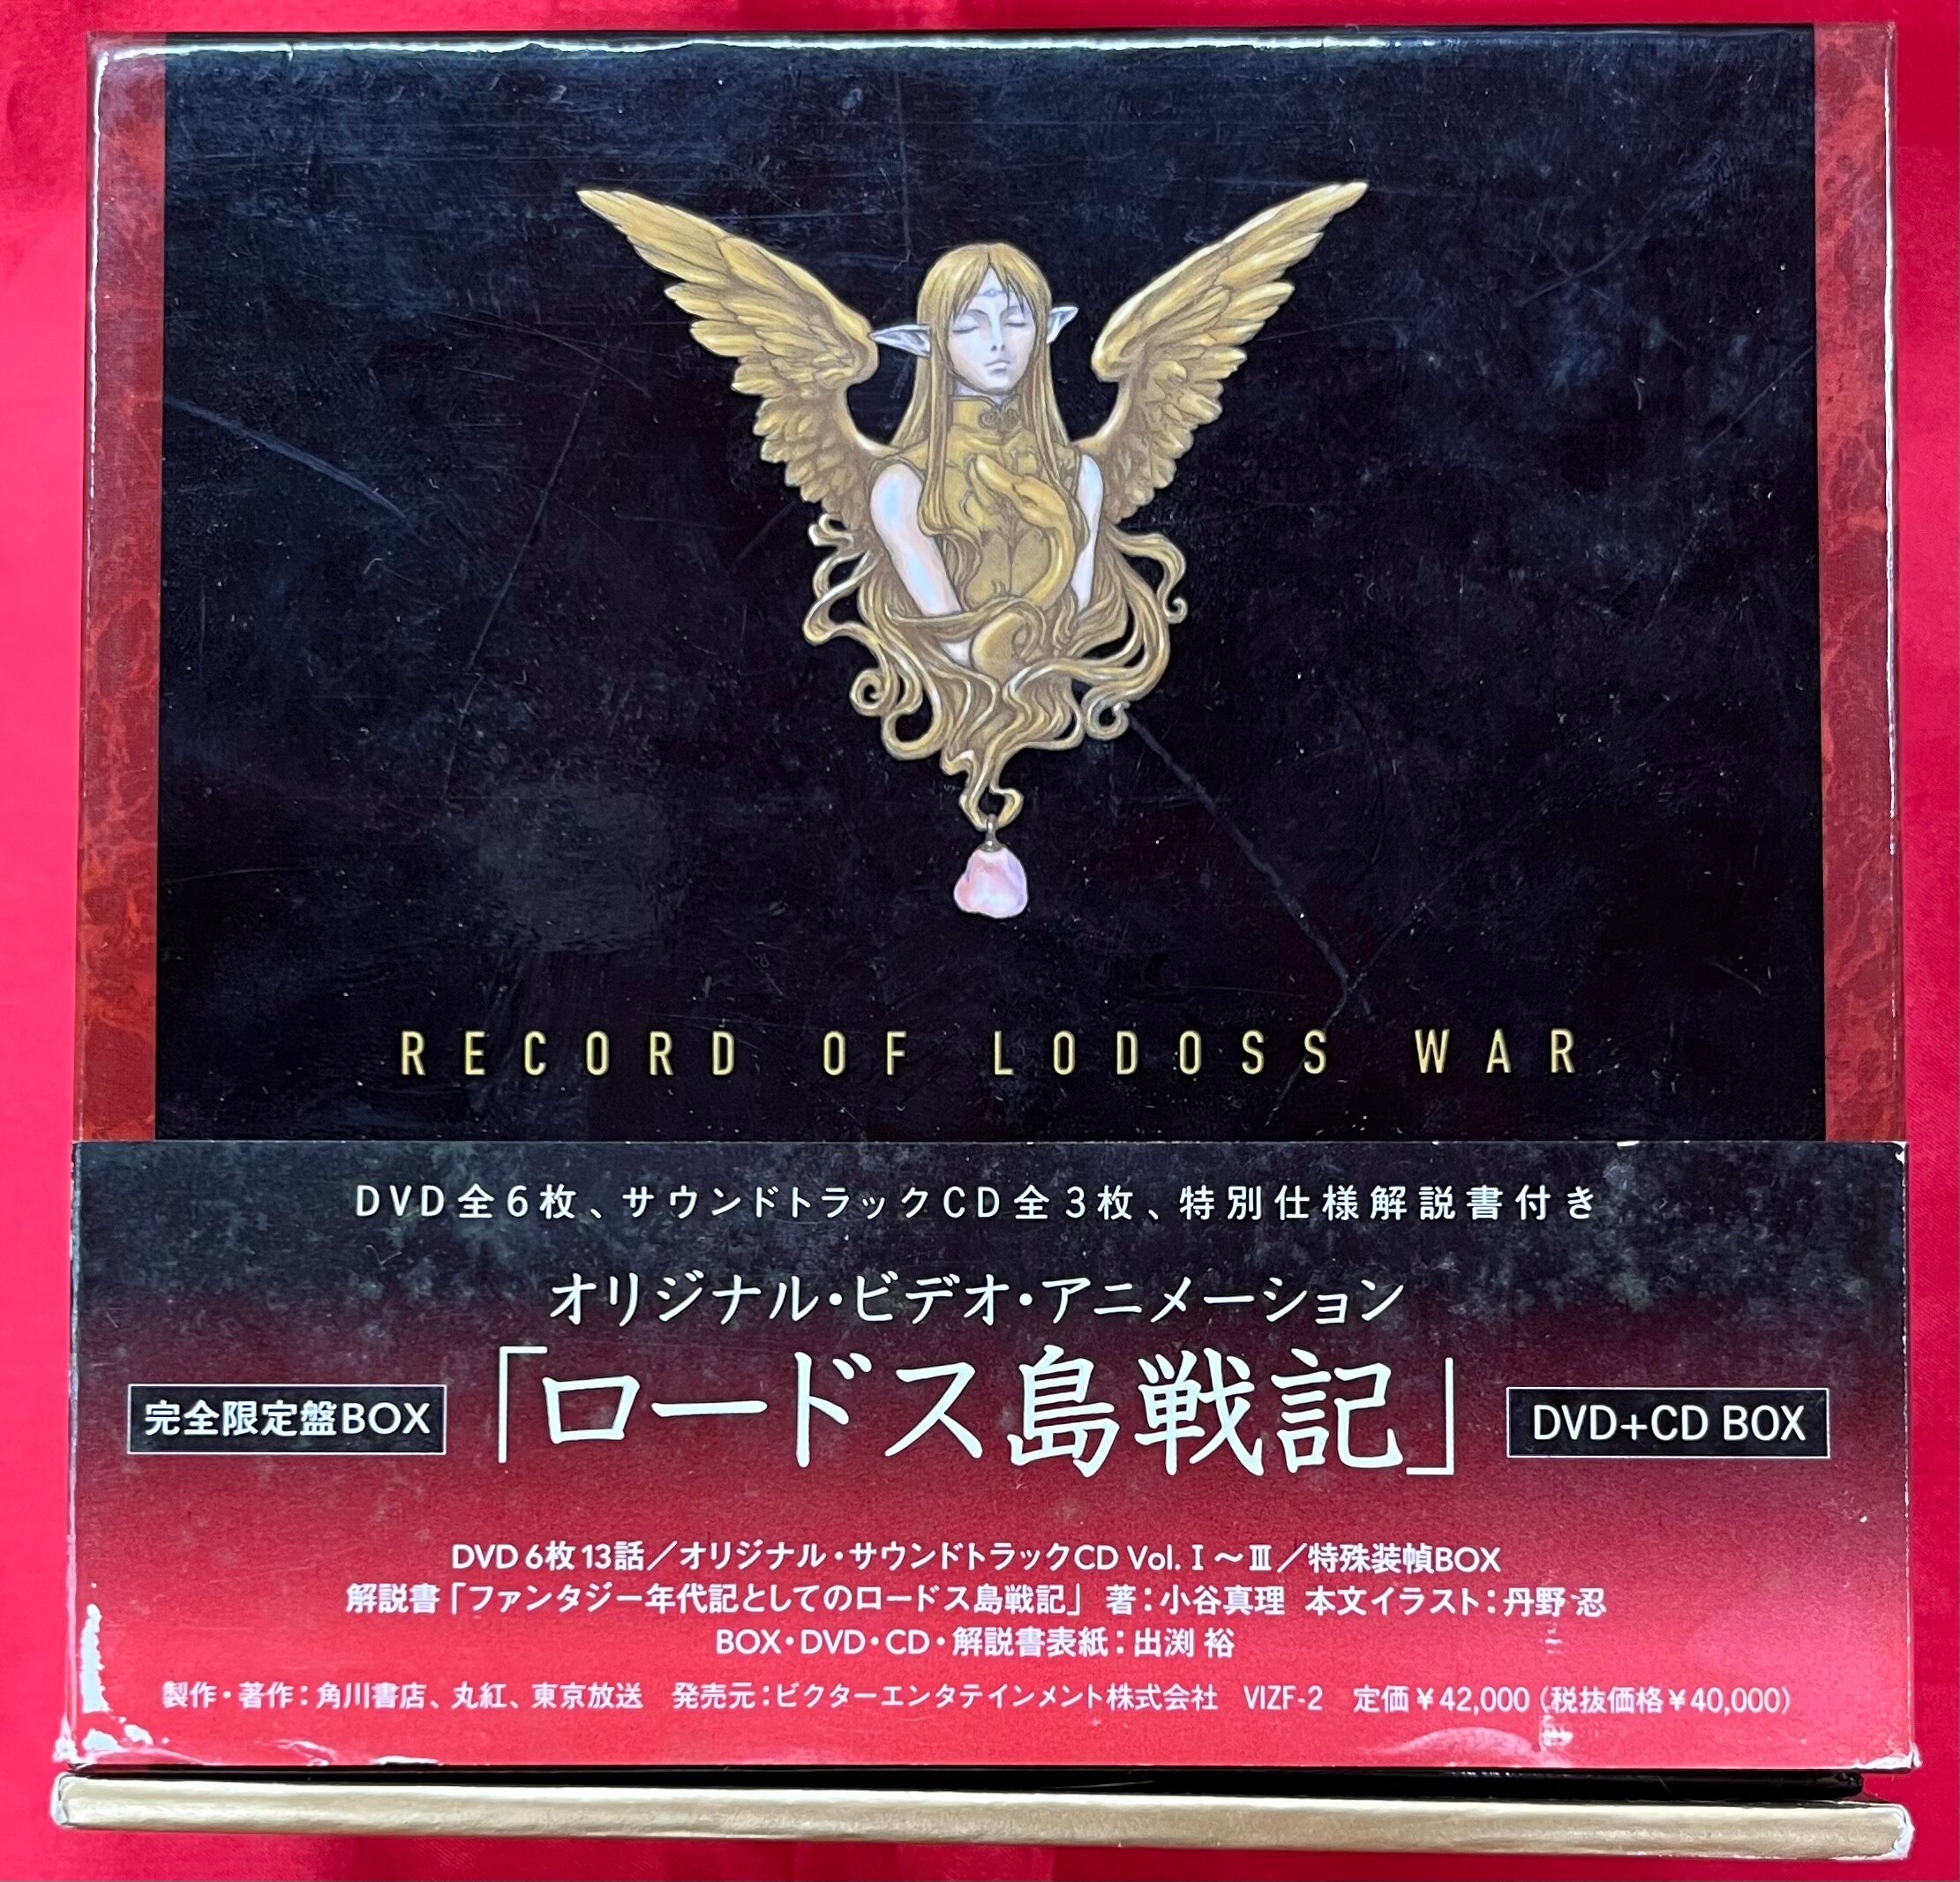 OVA ロードス島戦記 DVD+CD BOX〈初回生産限定・6枚組〉 - アニメ